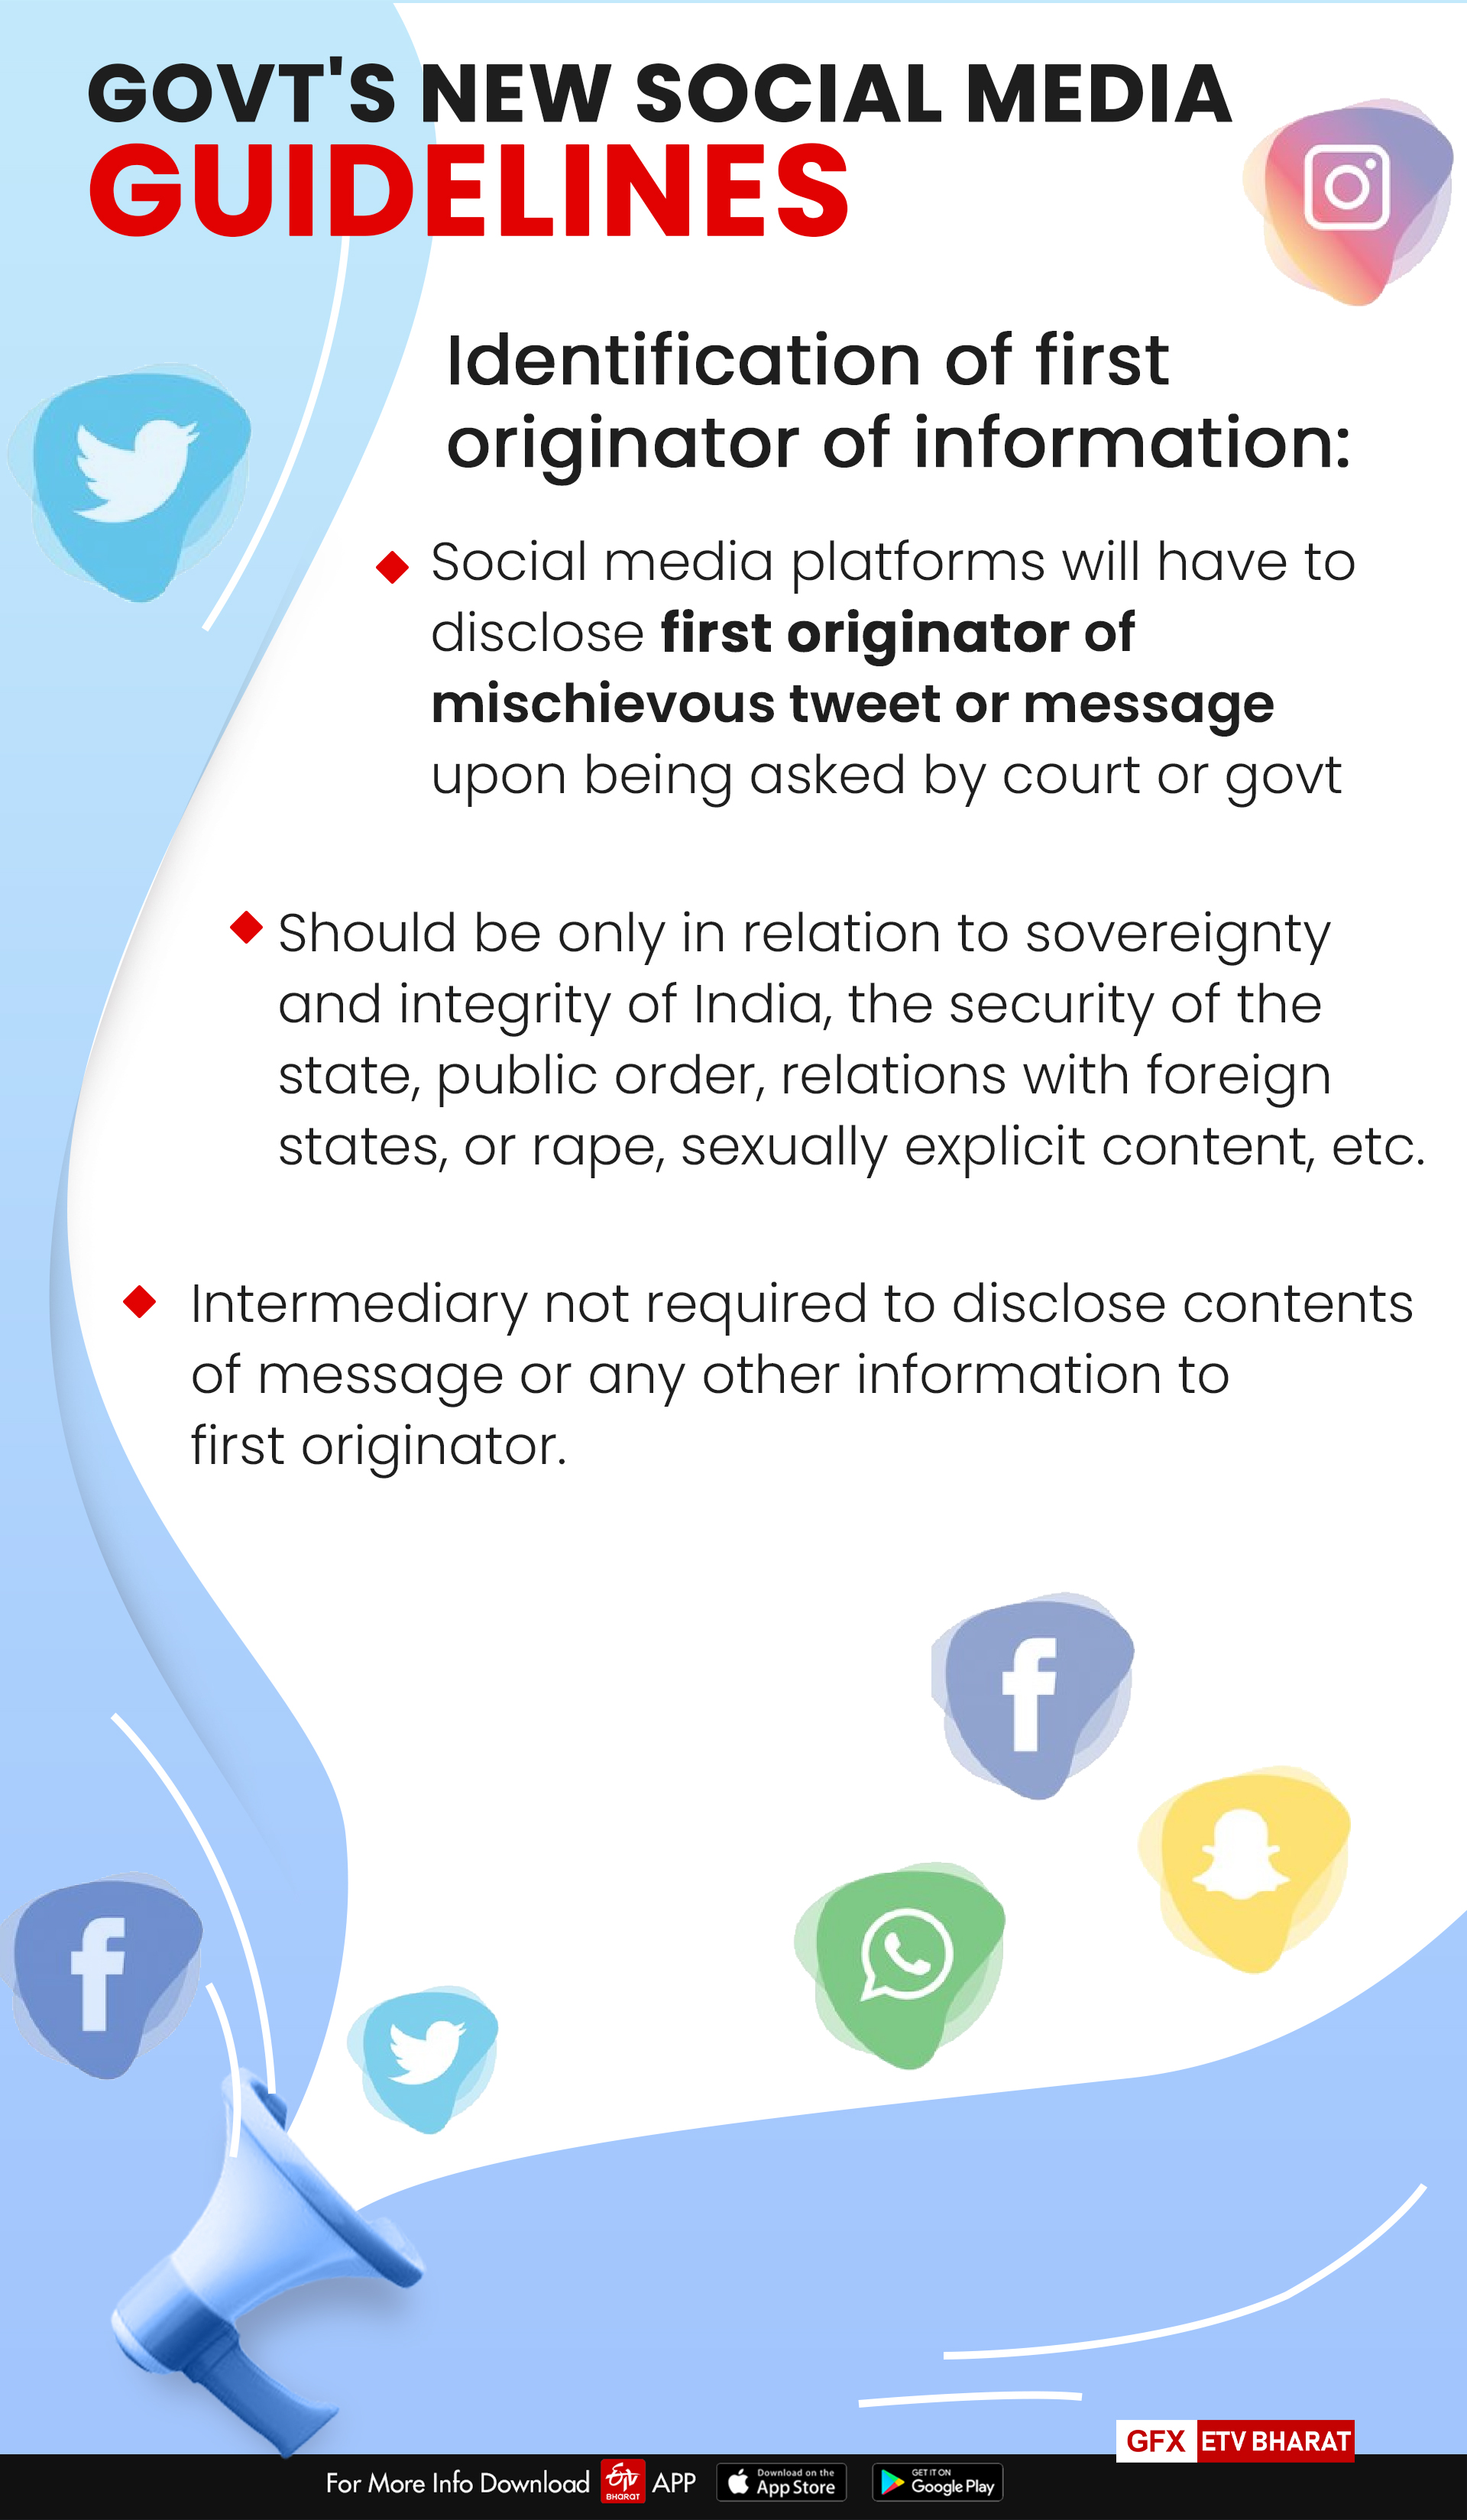 Govt's guidelines for social media platforms